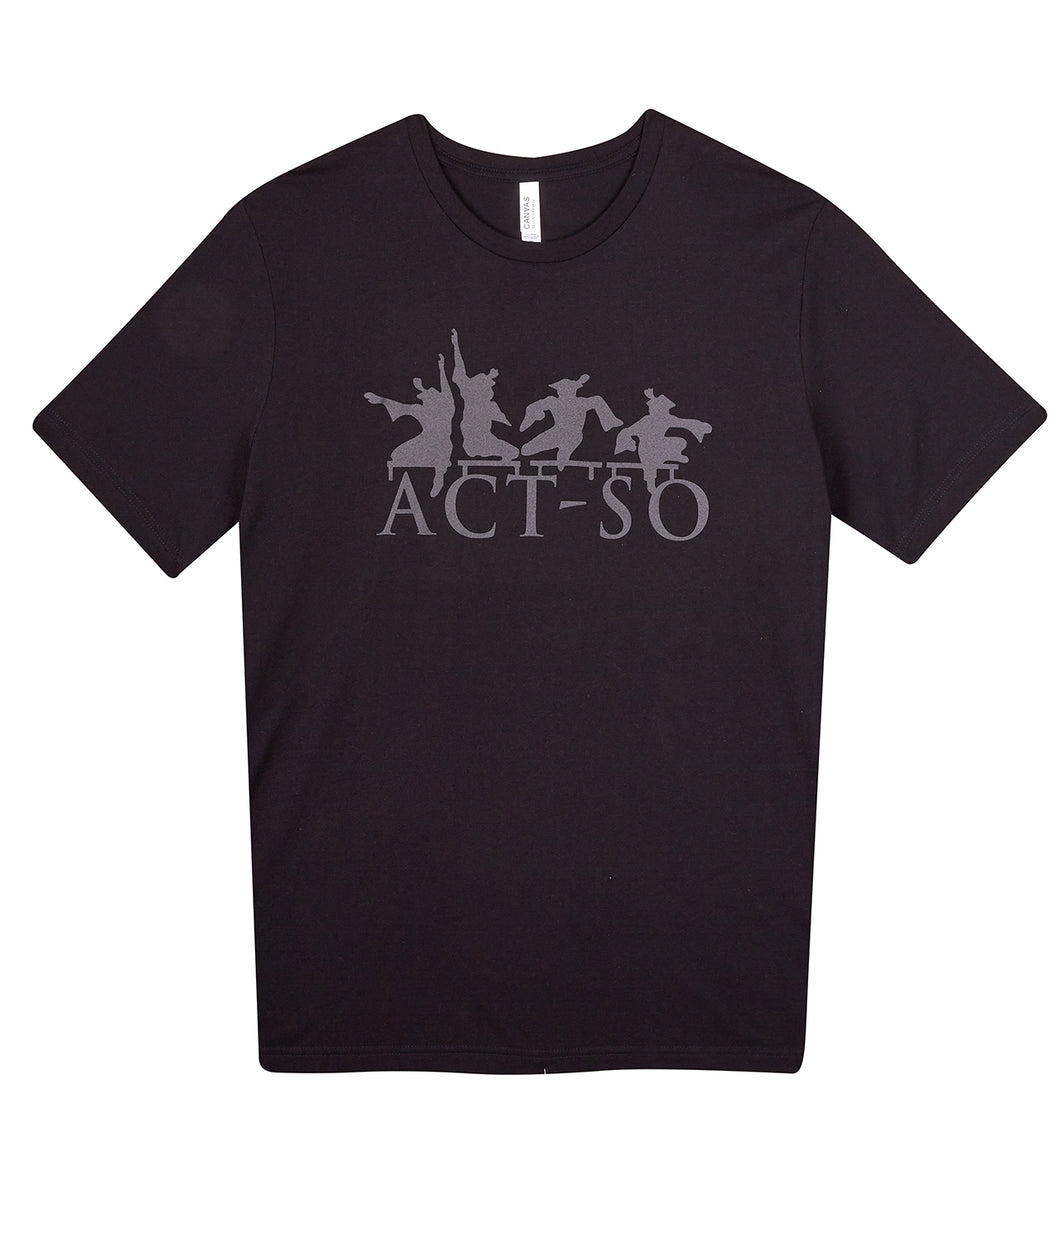 ACT-SO black shirt with black print logo